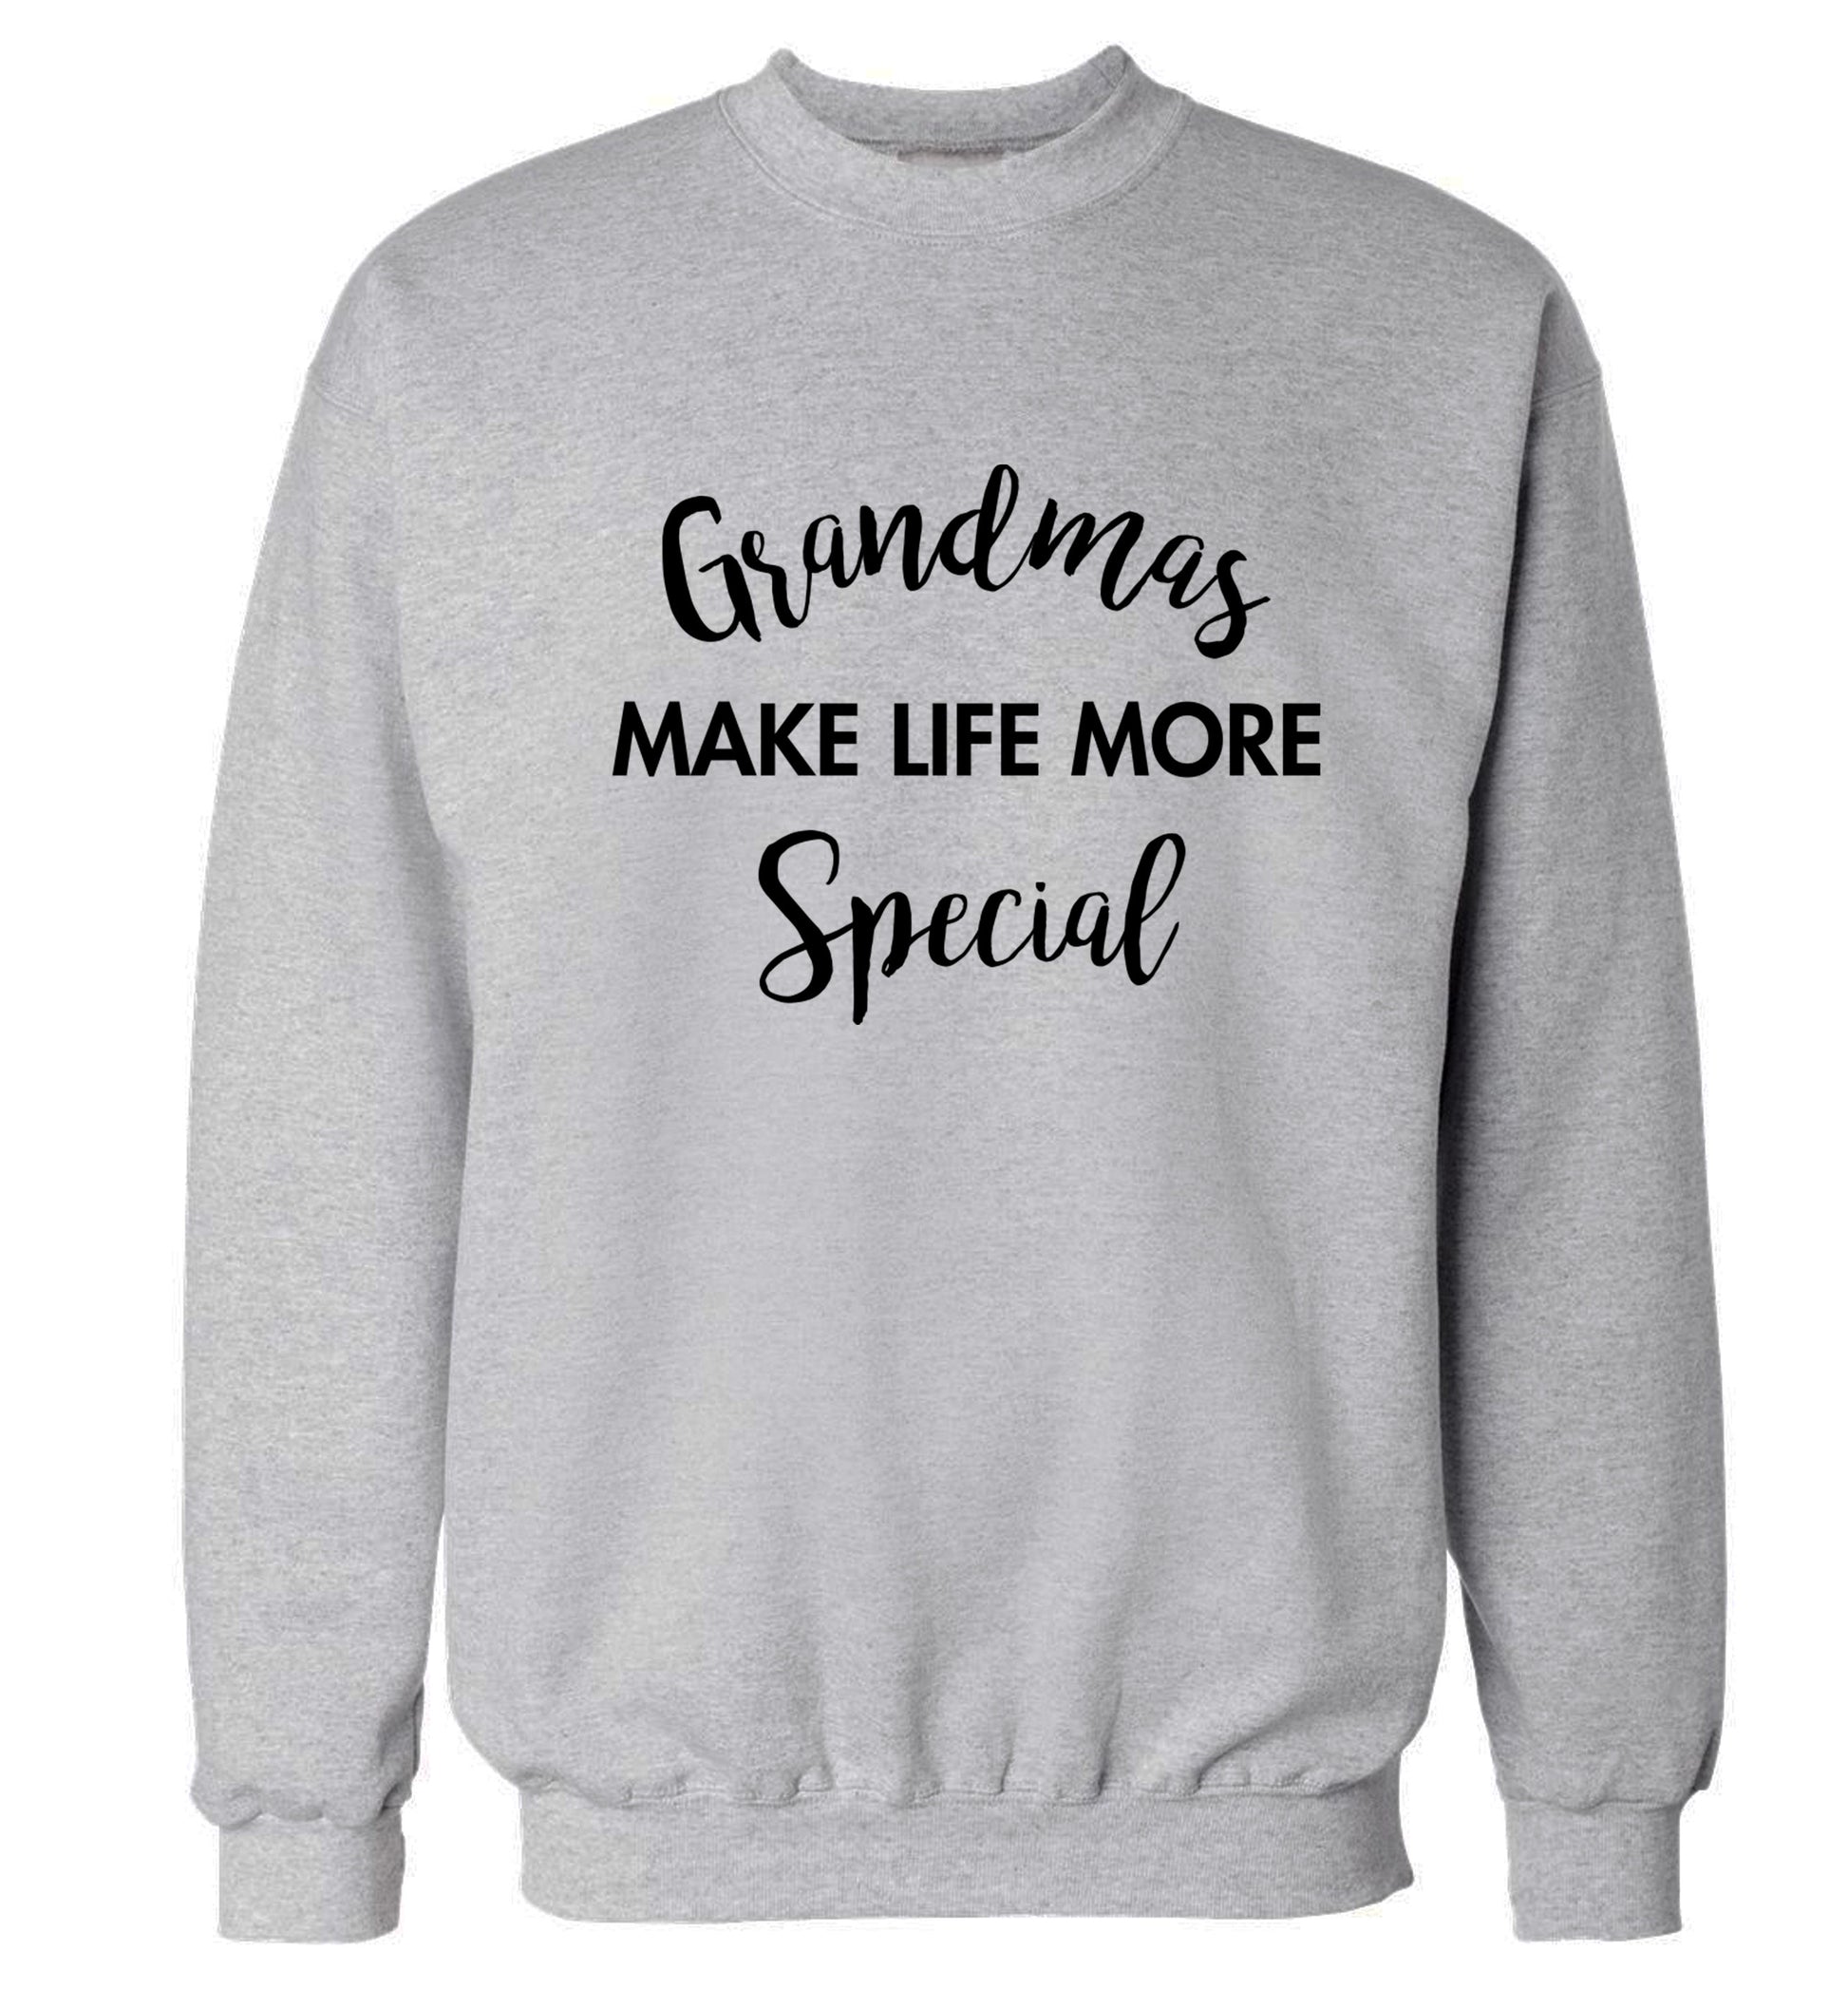 Grandmas make life more special Adult's unisex grey Sweater 2XL